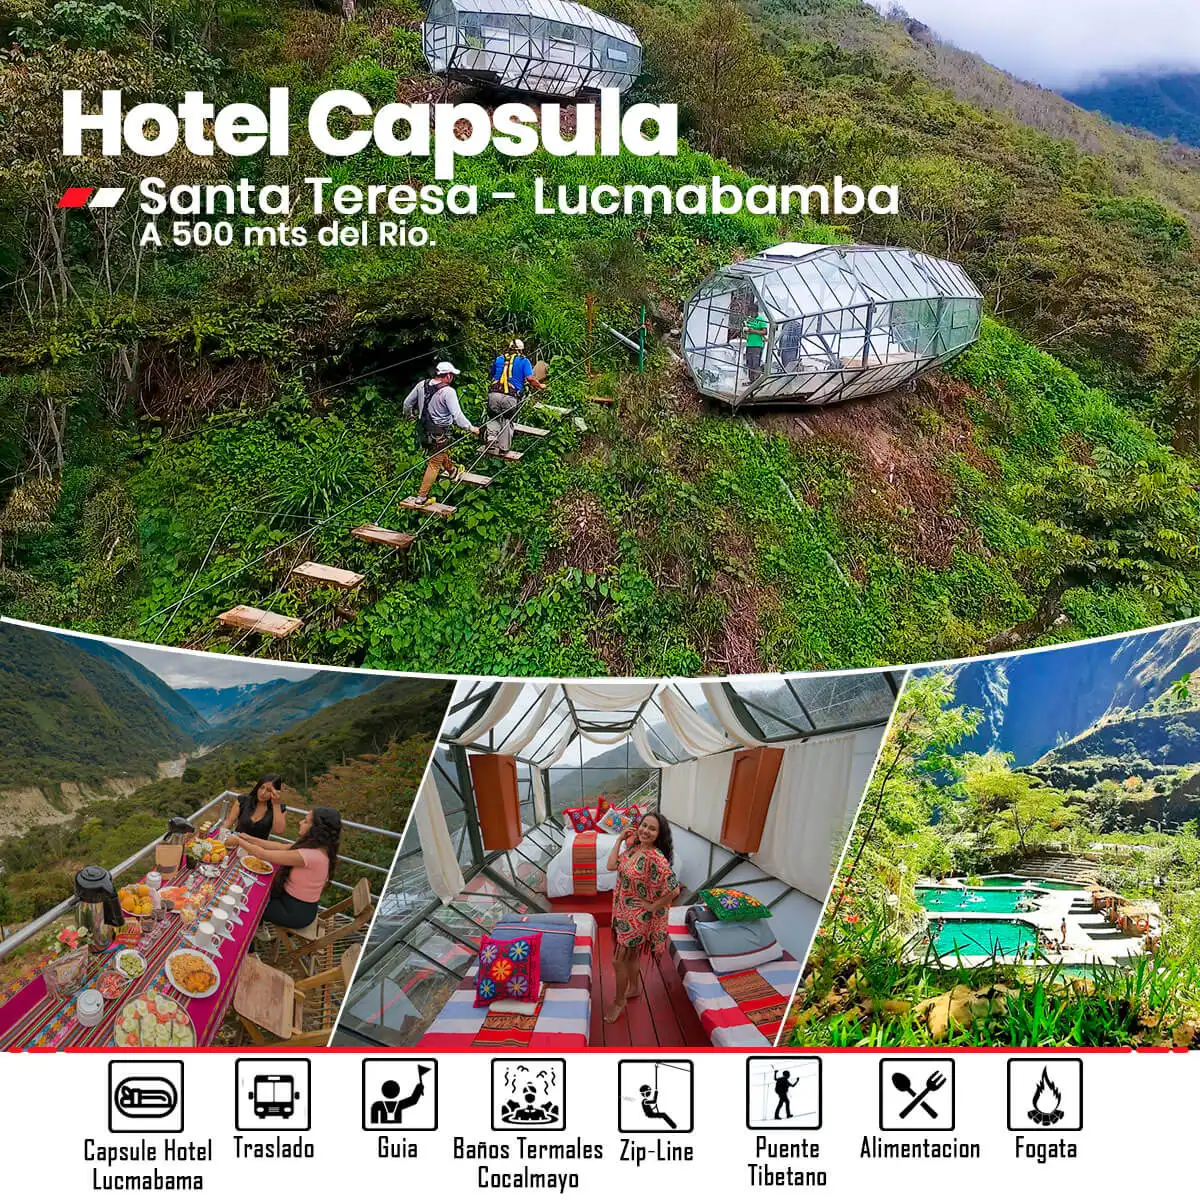 Hotel Capsula en Santa Teresa - Lucmabamba y baños termales wa.me/51964265060